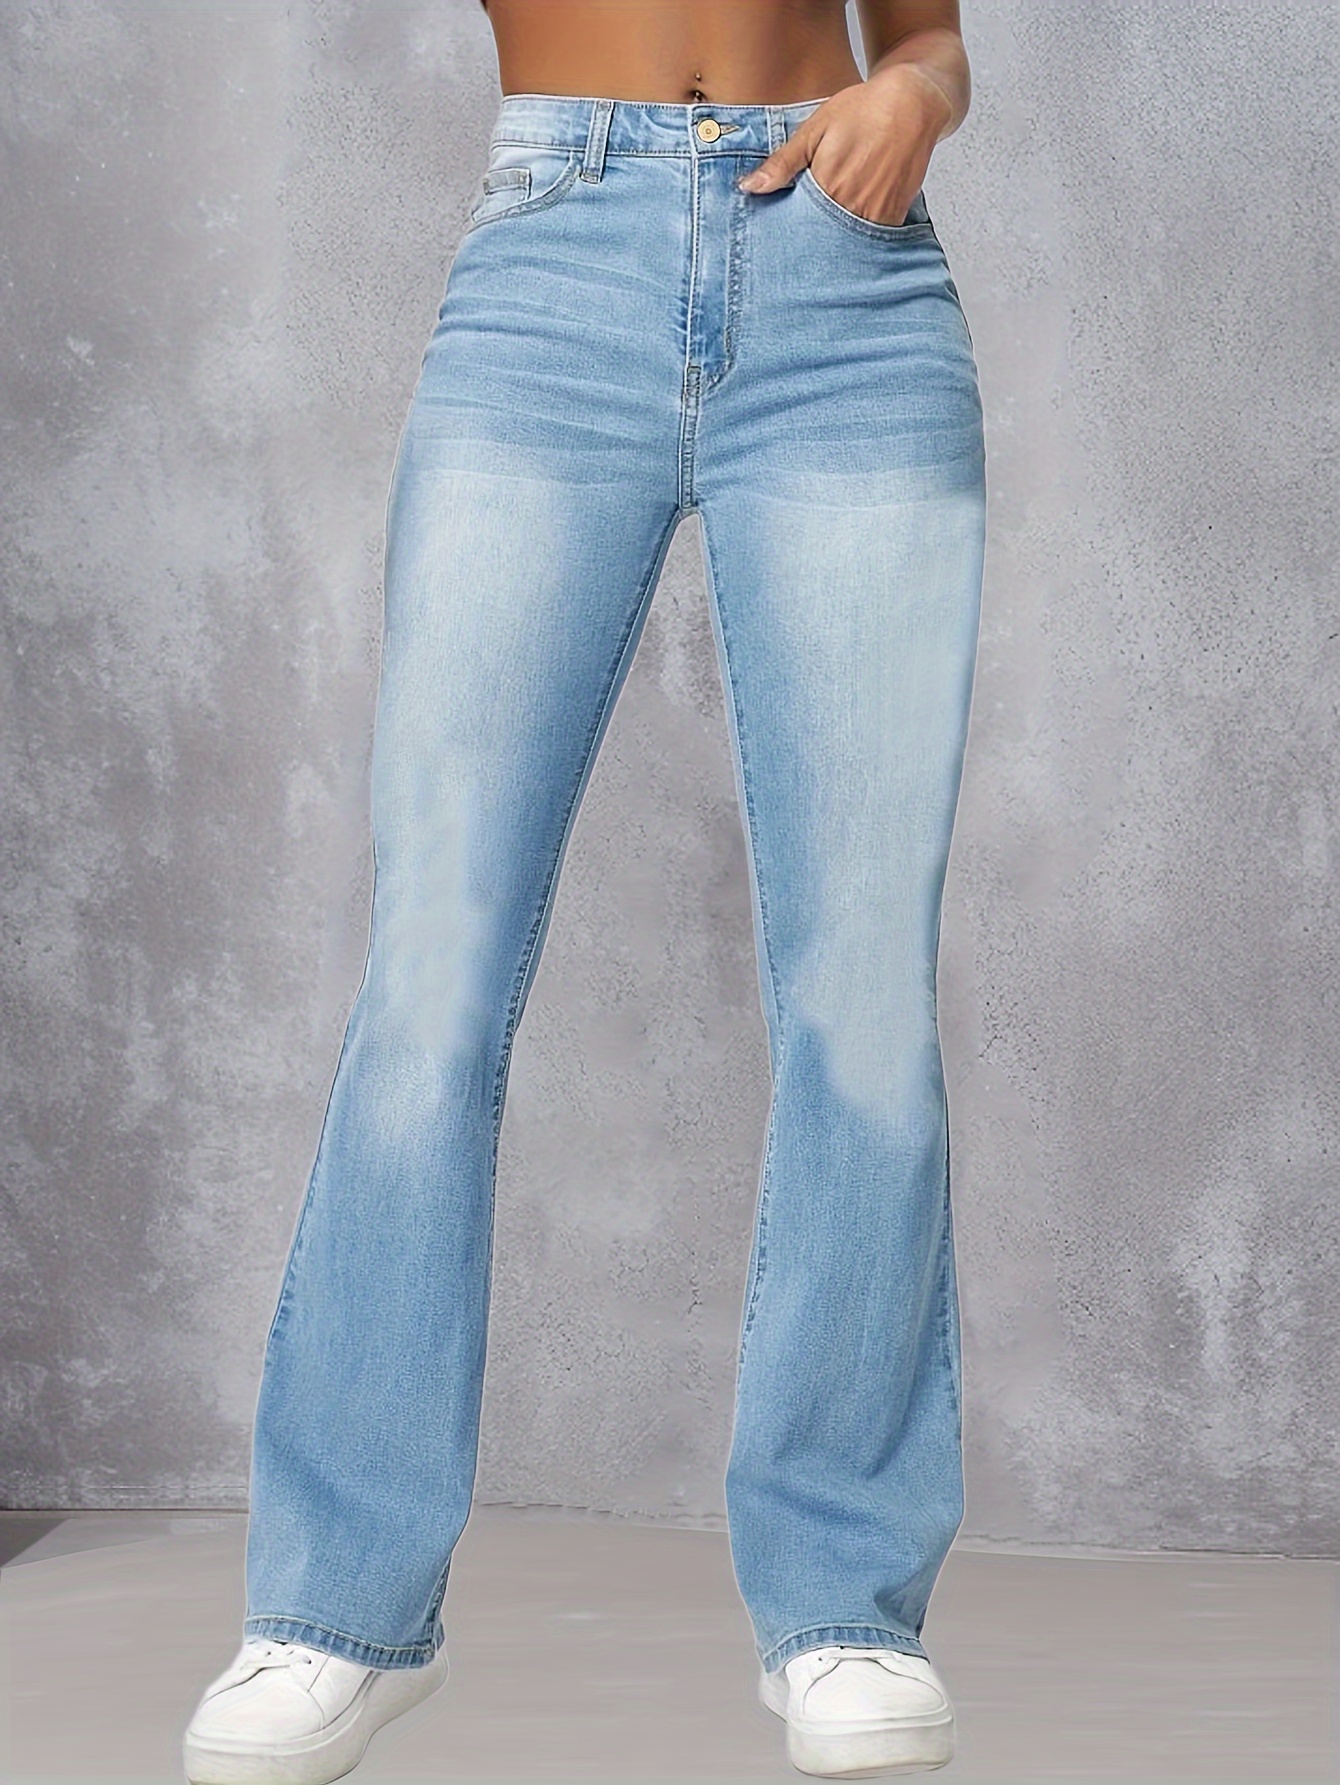 blue high stretch bootcut jeans slant pockets high waist denim pants womens denim jeans clothing